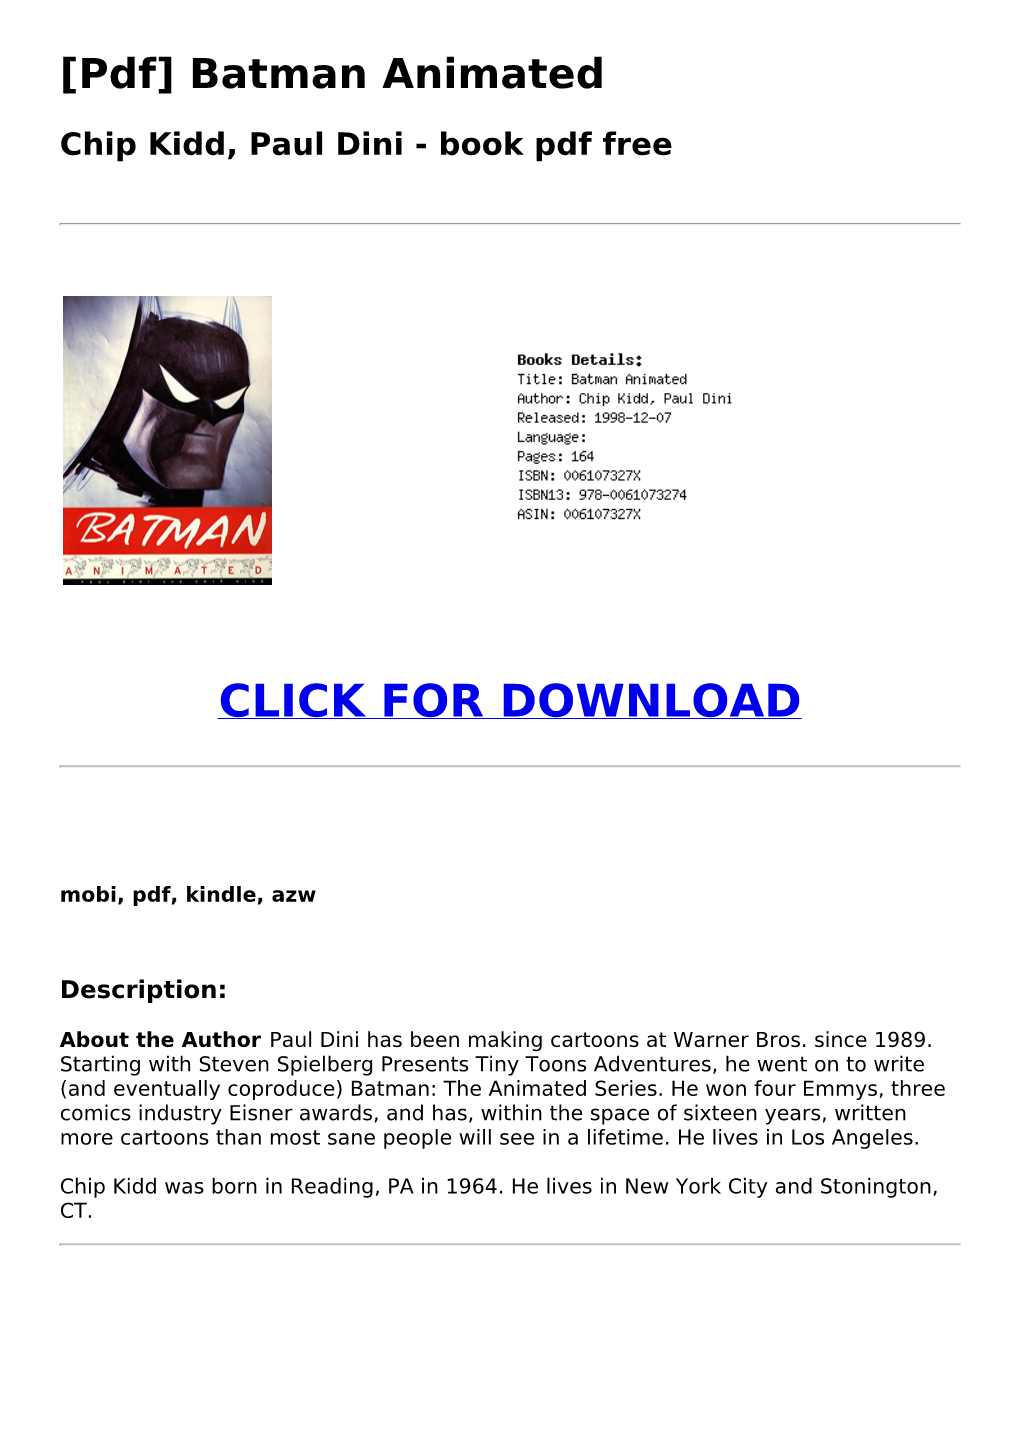 &lt;3660C20&gt; [Pdf] Batman Animated Chip Kidd, Paul Dini